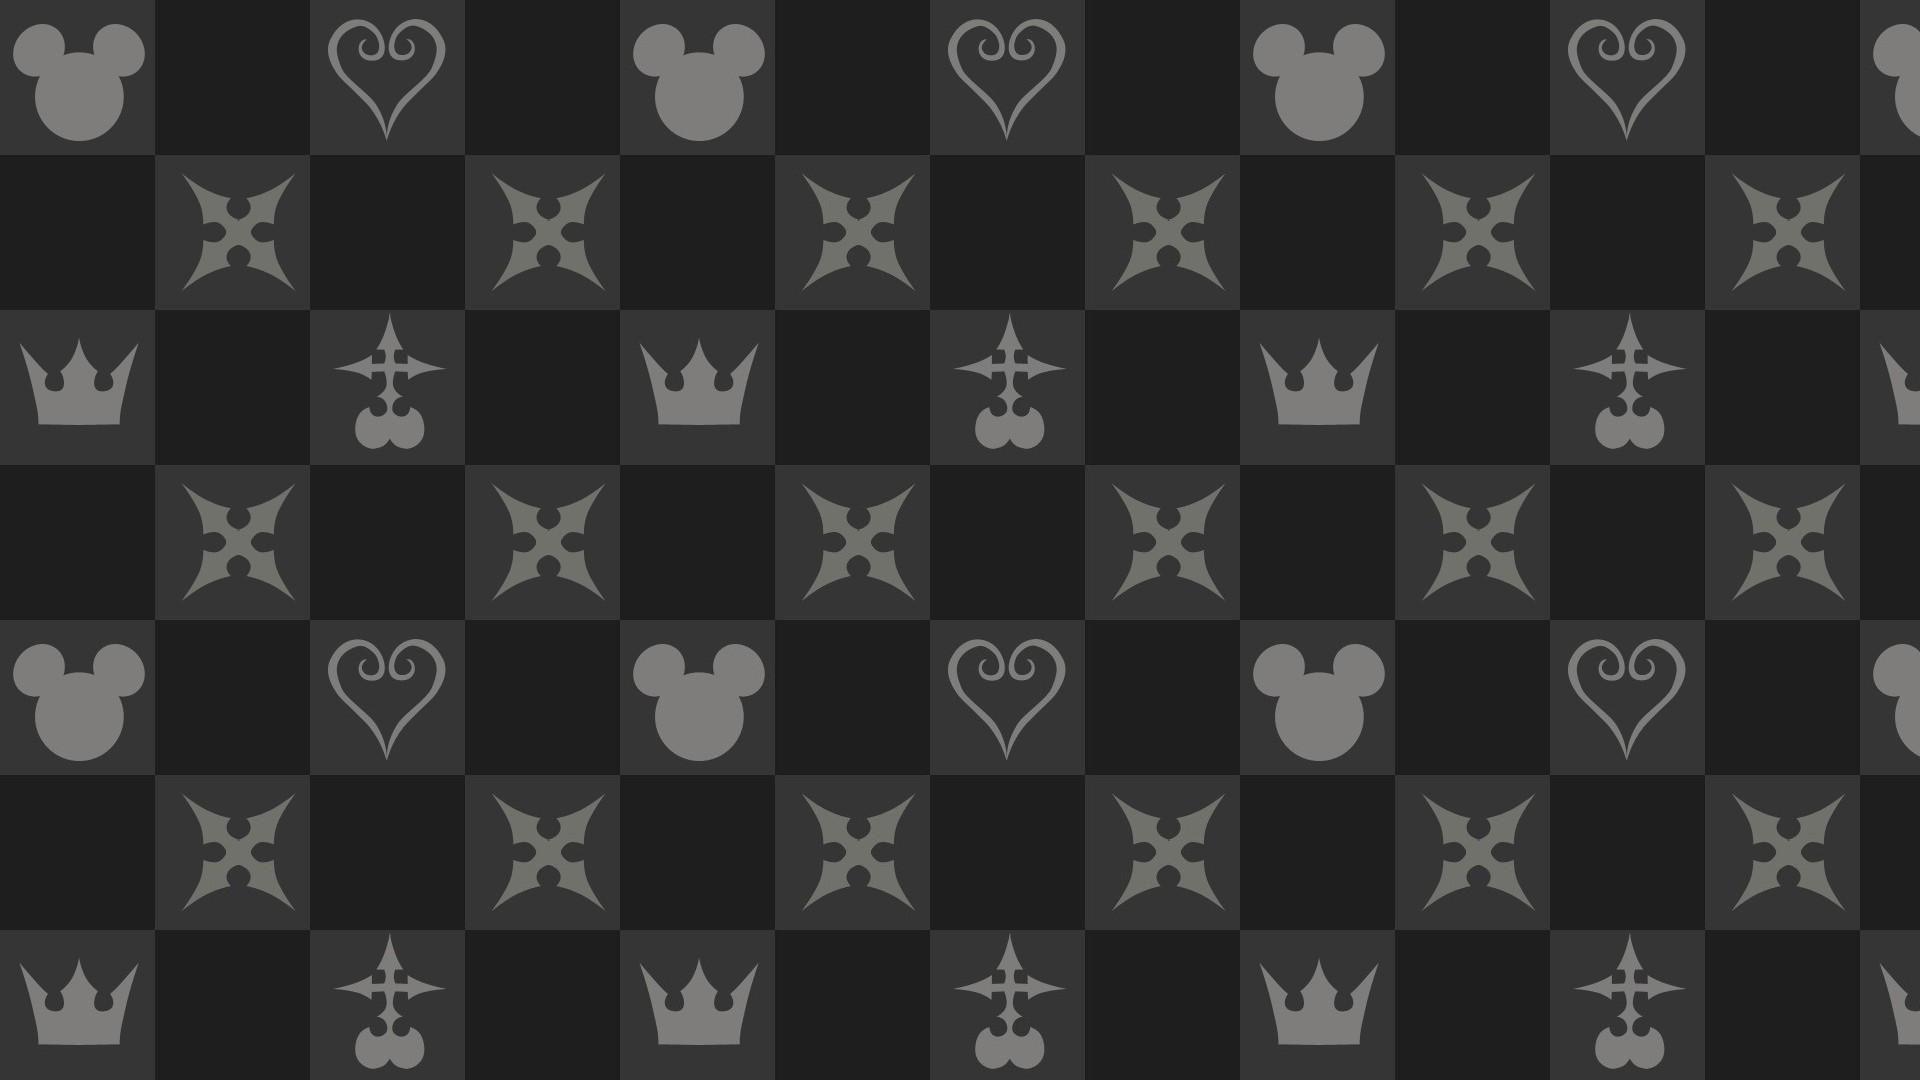 Latest Kingdom Hearts Heartless Wallpaper FULL HD 1920×1080